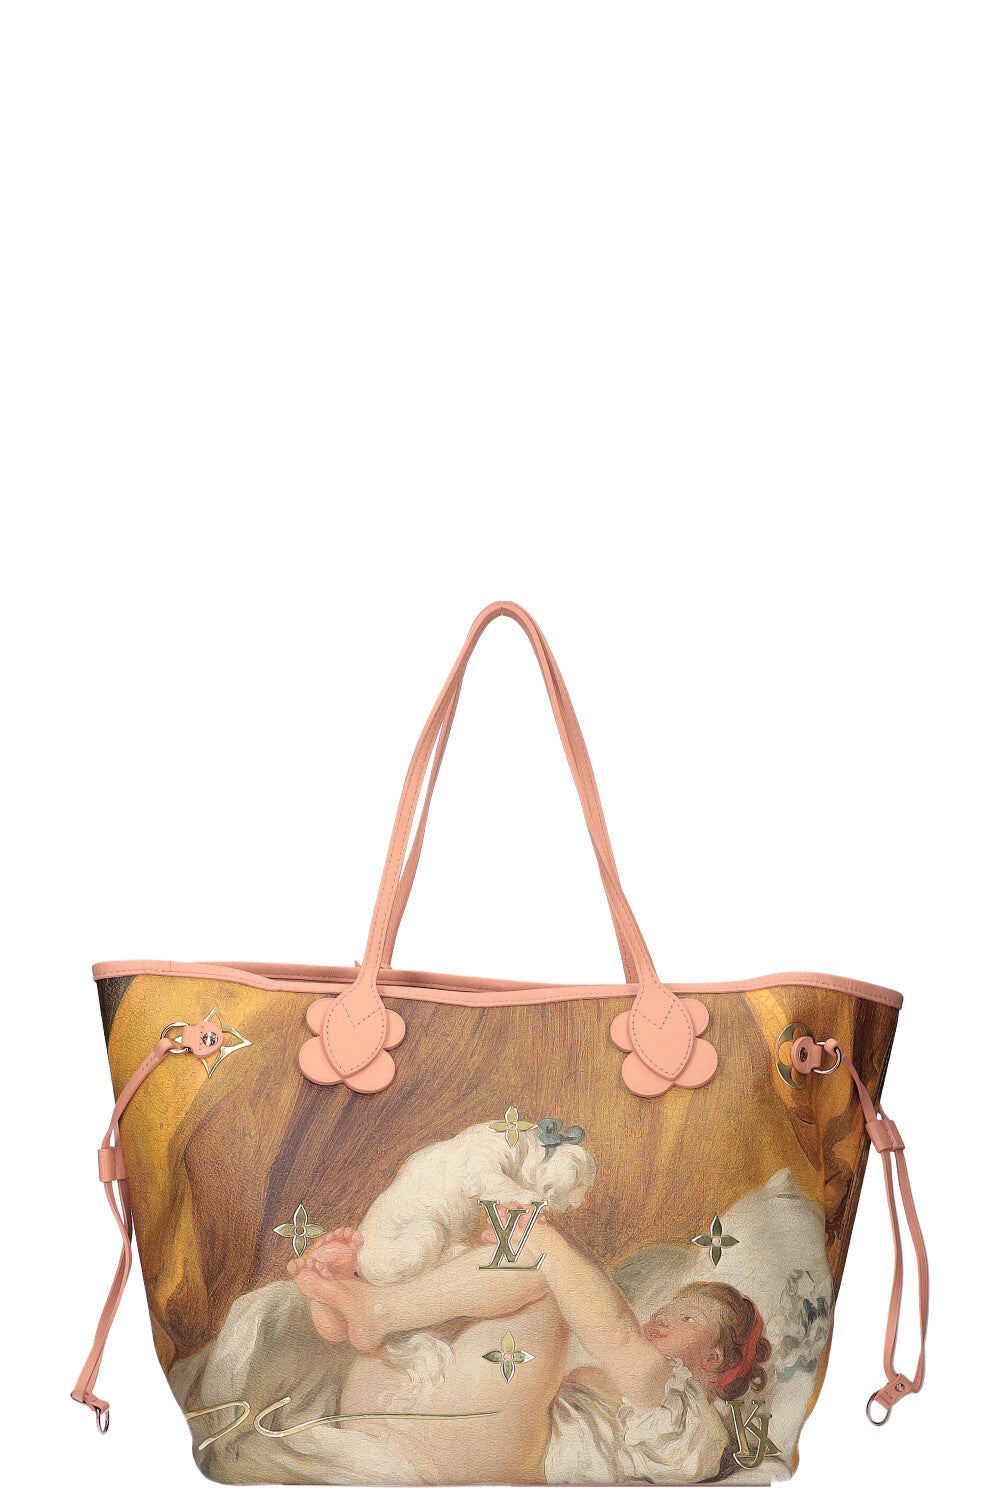 Louis Vuitton Fragonard Neverfull Handbag, From The Limited